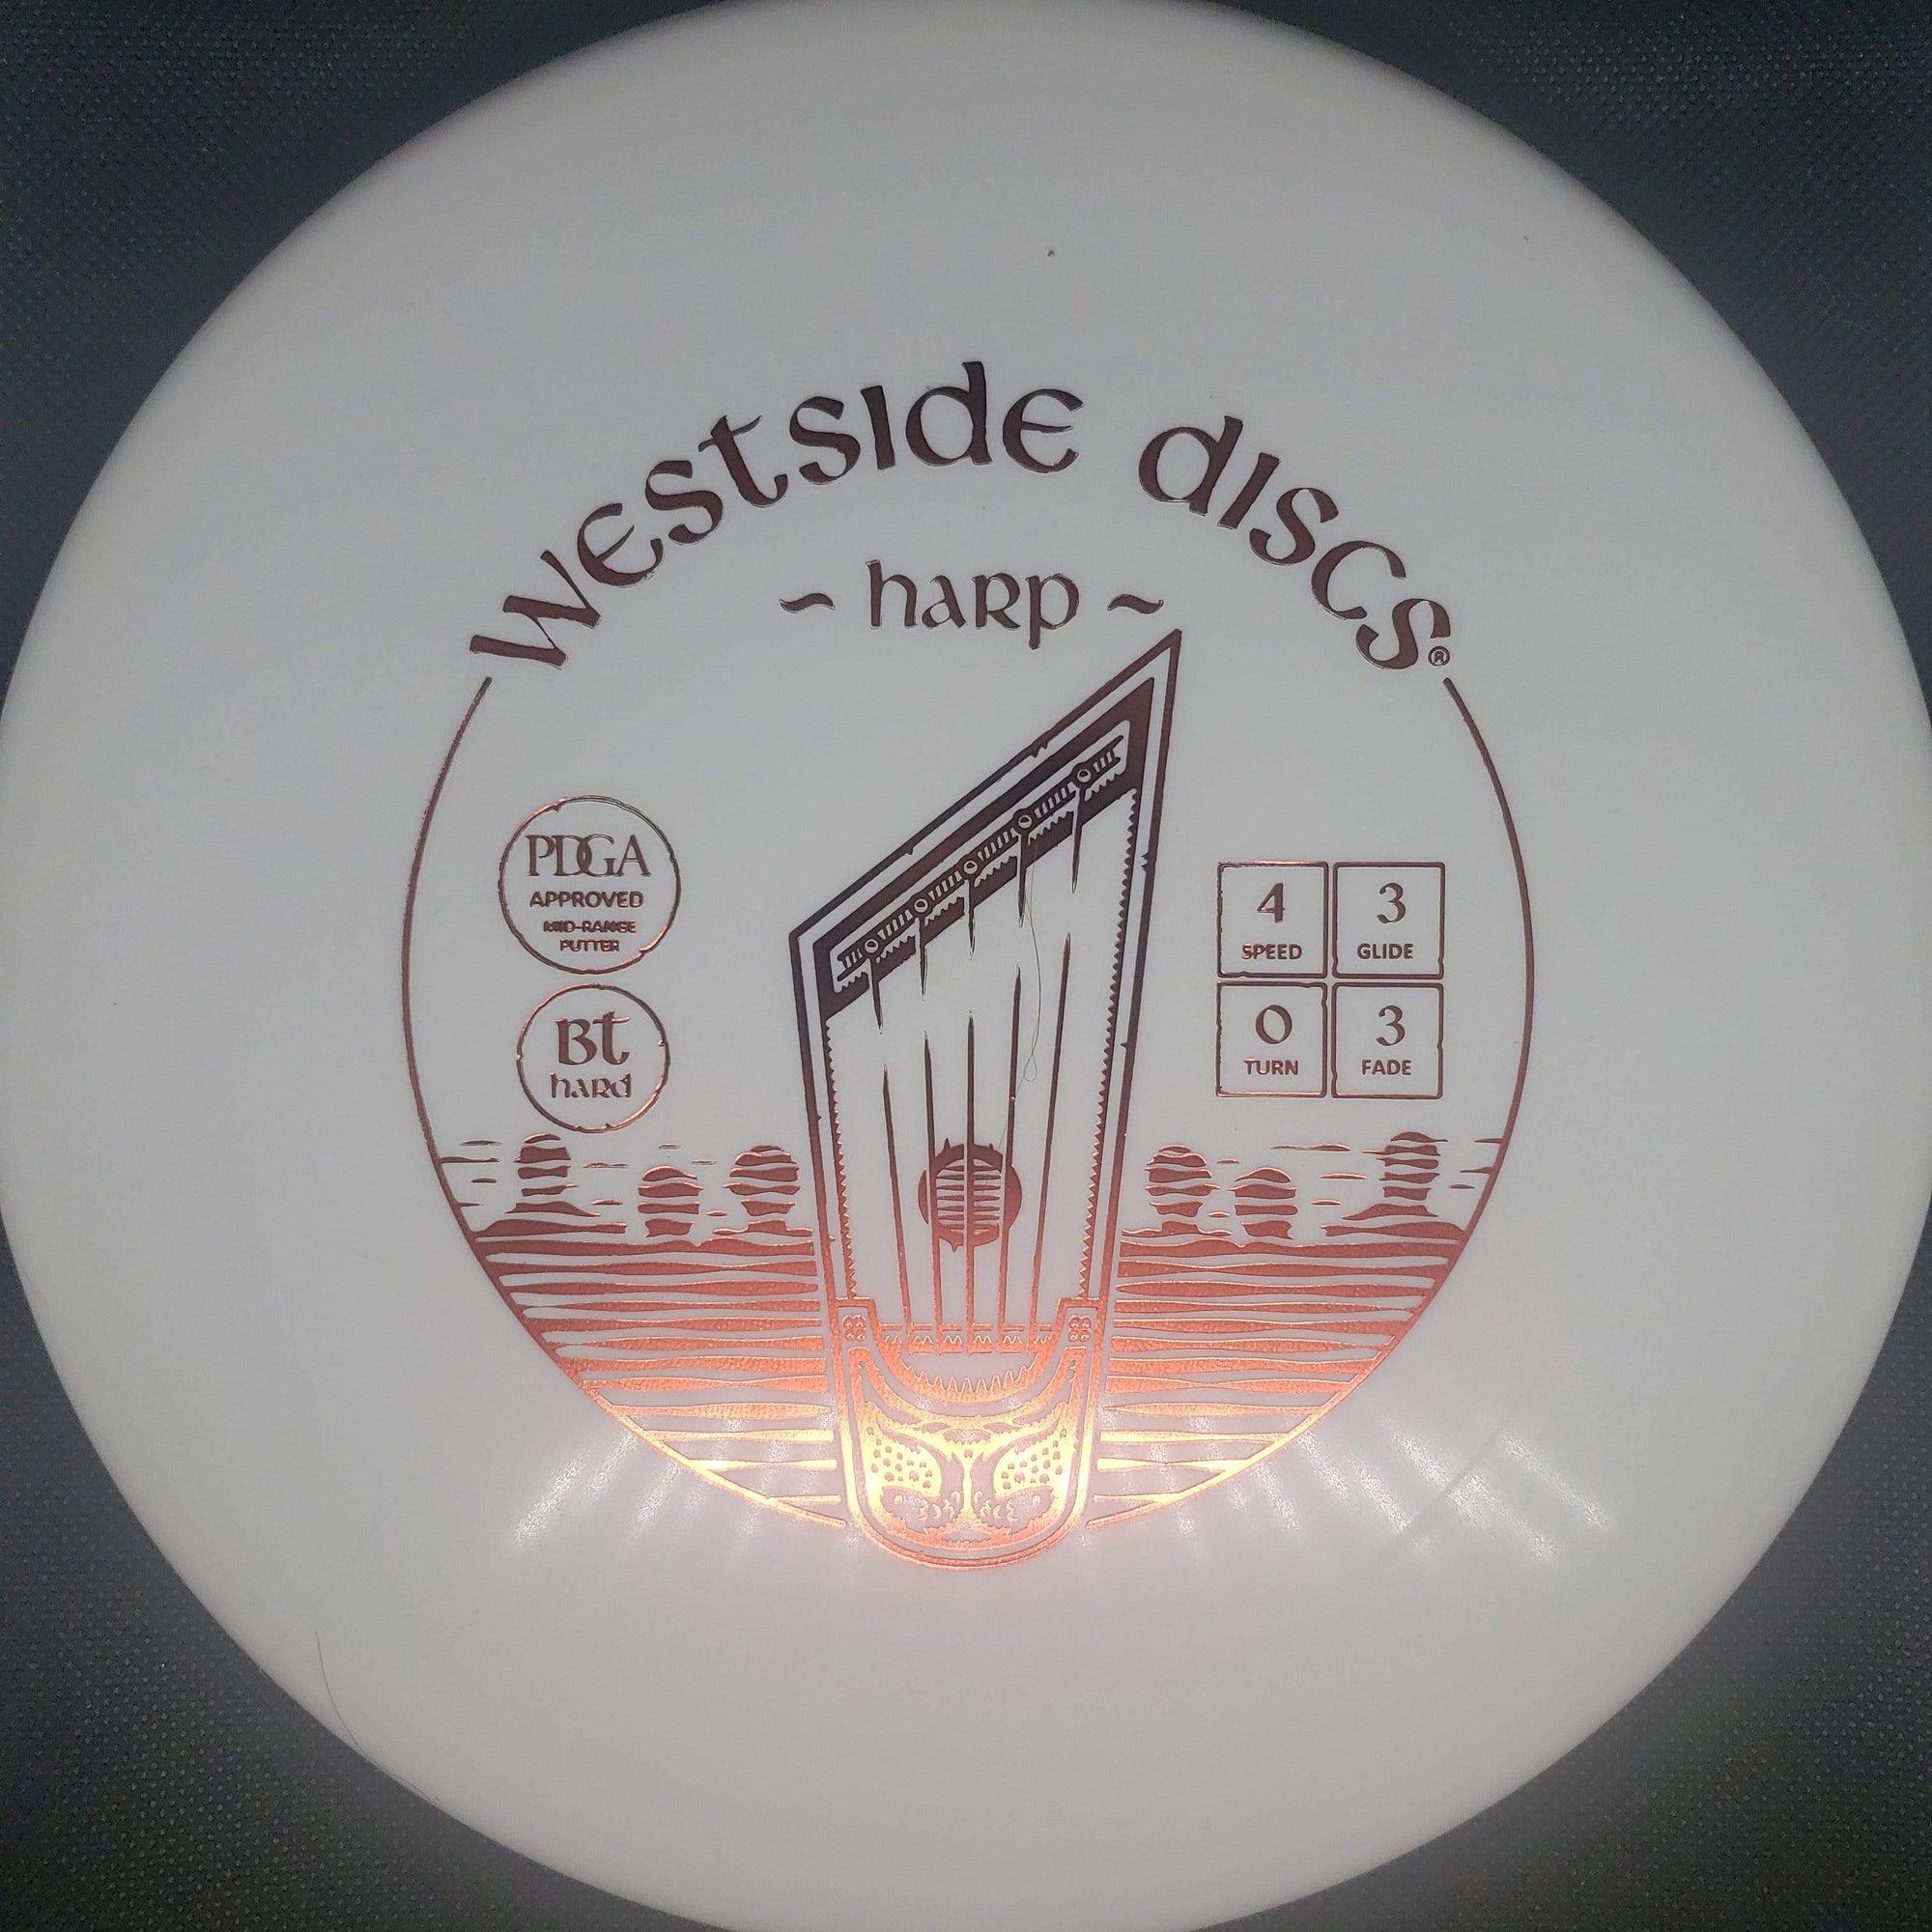 Westside Discs Mid Range White Red Stamp 175g BT Hard Harp